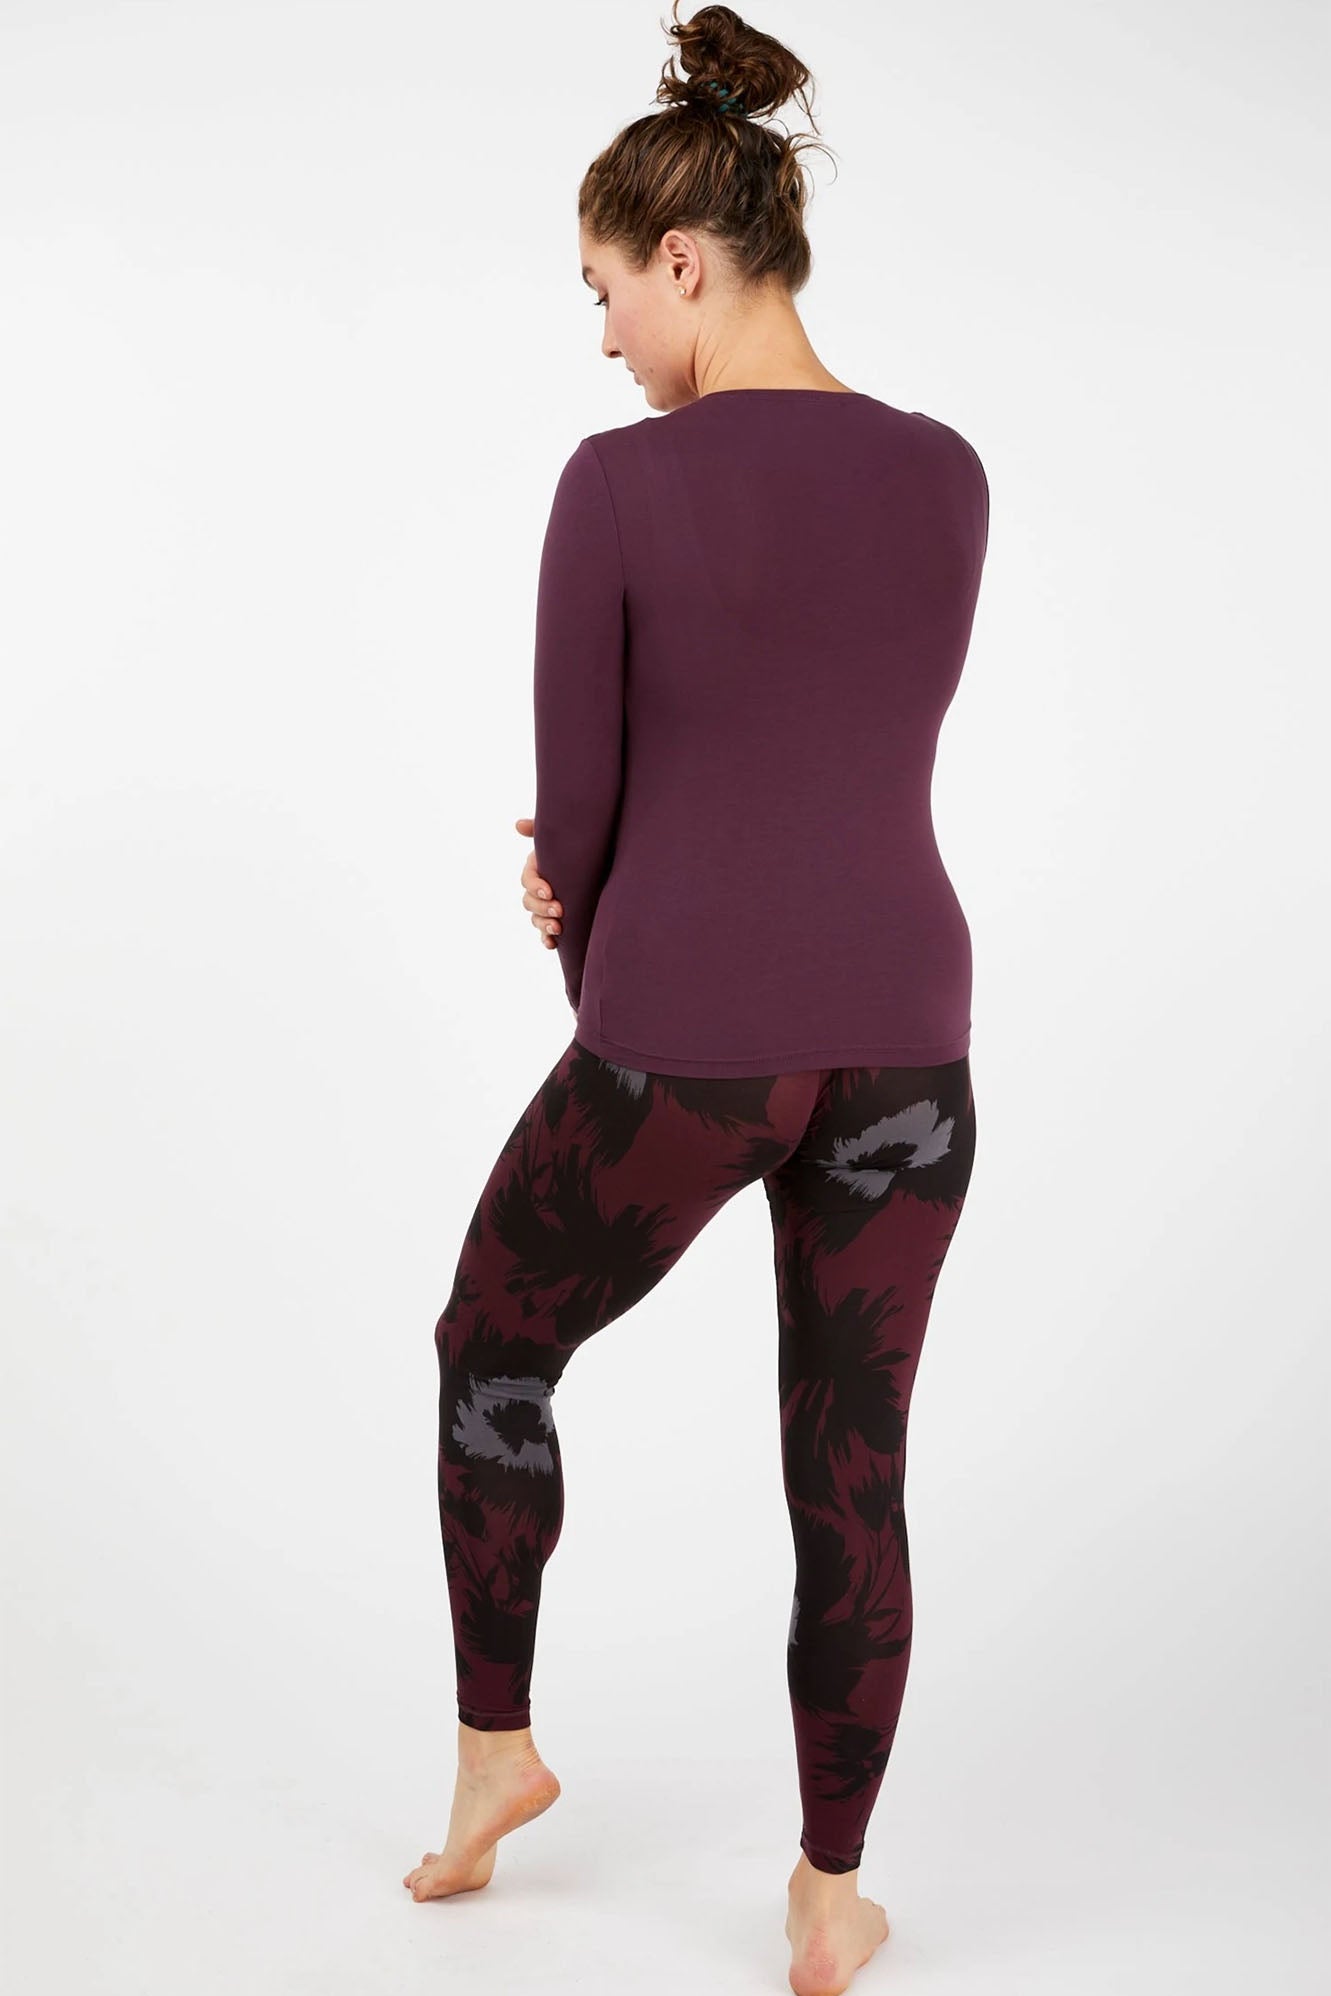 Woman wearing Tani 89118 leggings in Bloom back view